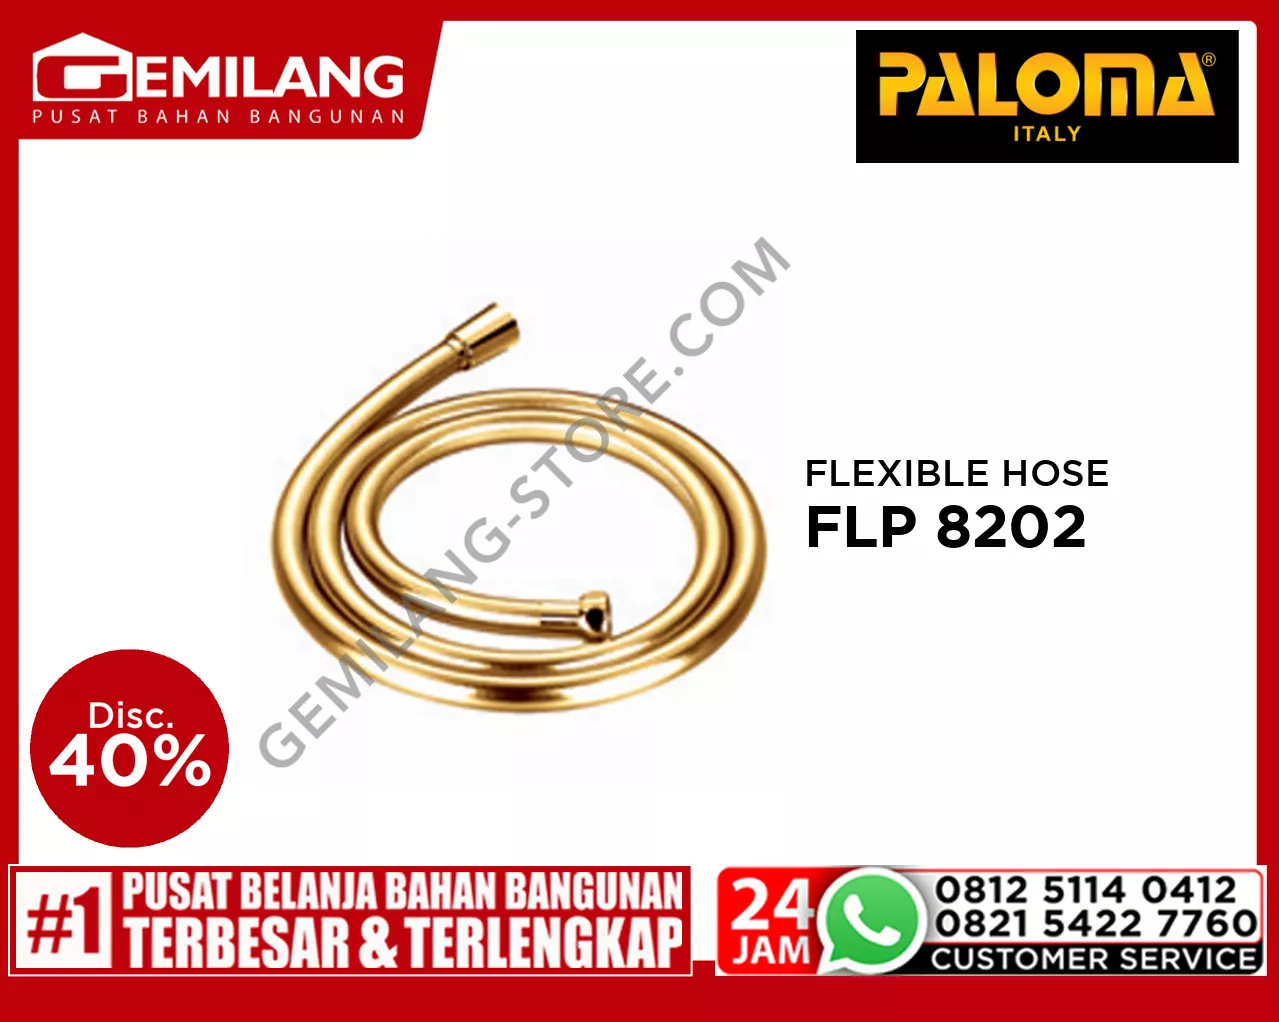 PALOMA PVC FLEXIBLE HOSE LUXURY GOLD FLP 7202